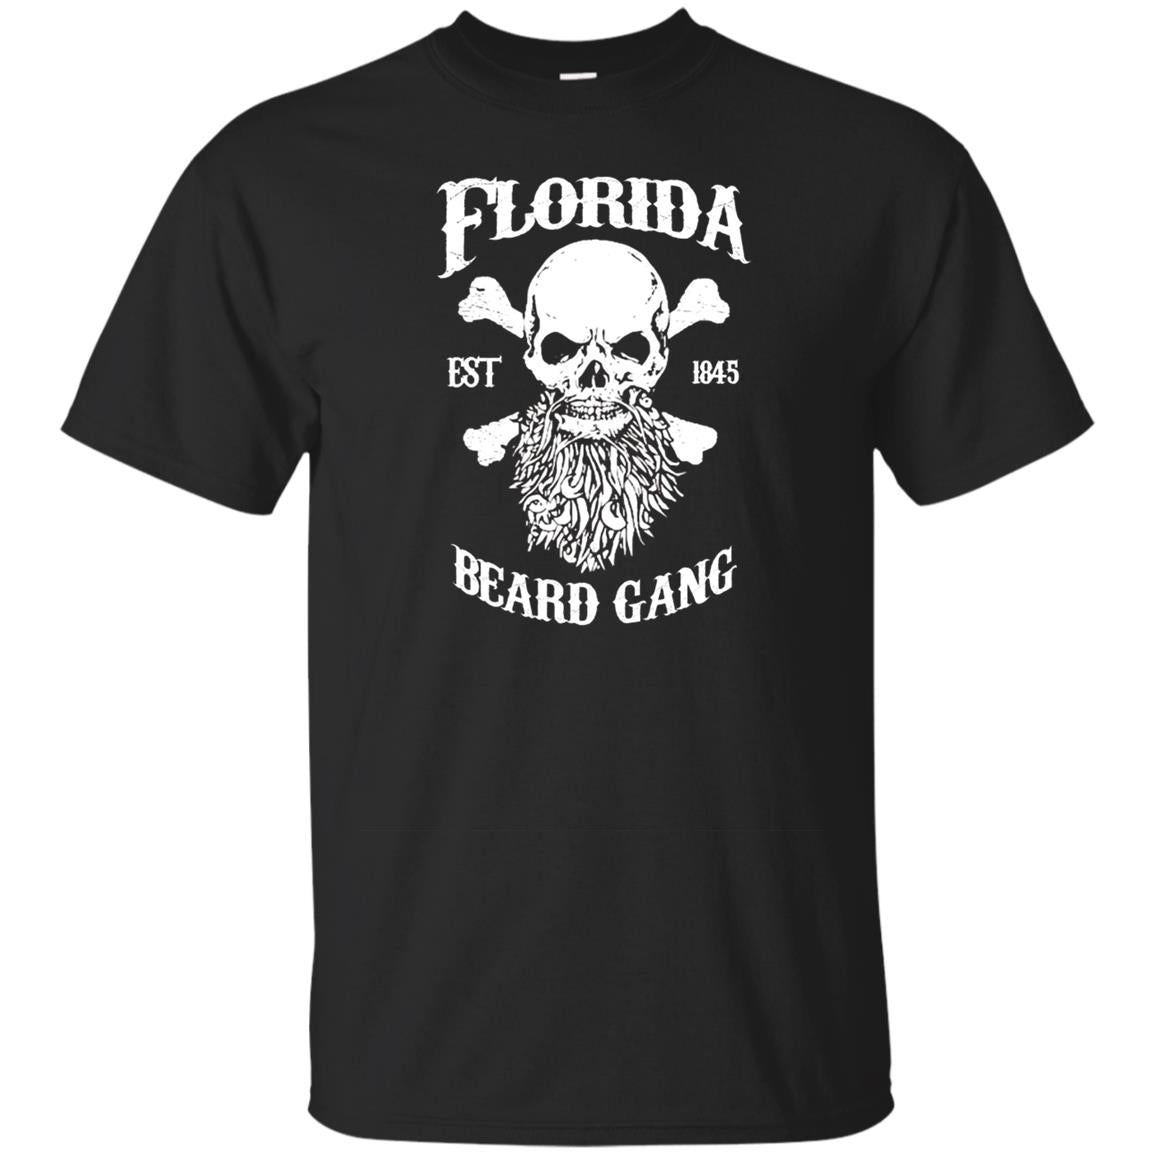 Florida Beard Gang T-shirt - Florida In My Heart T-shirt